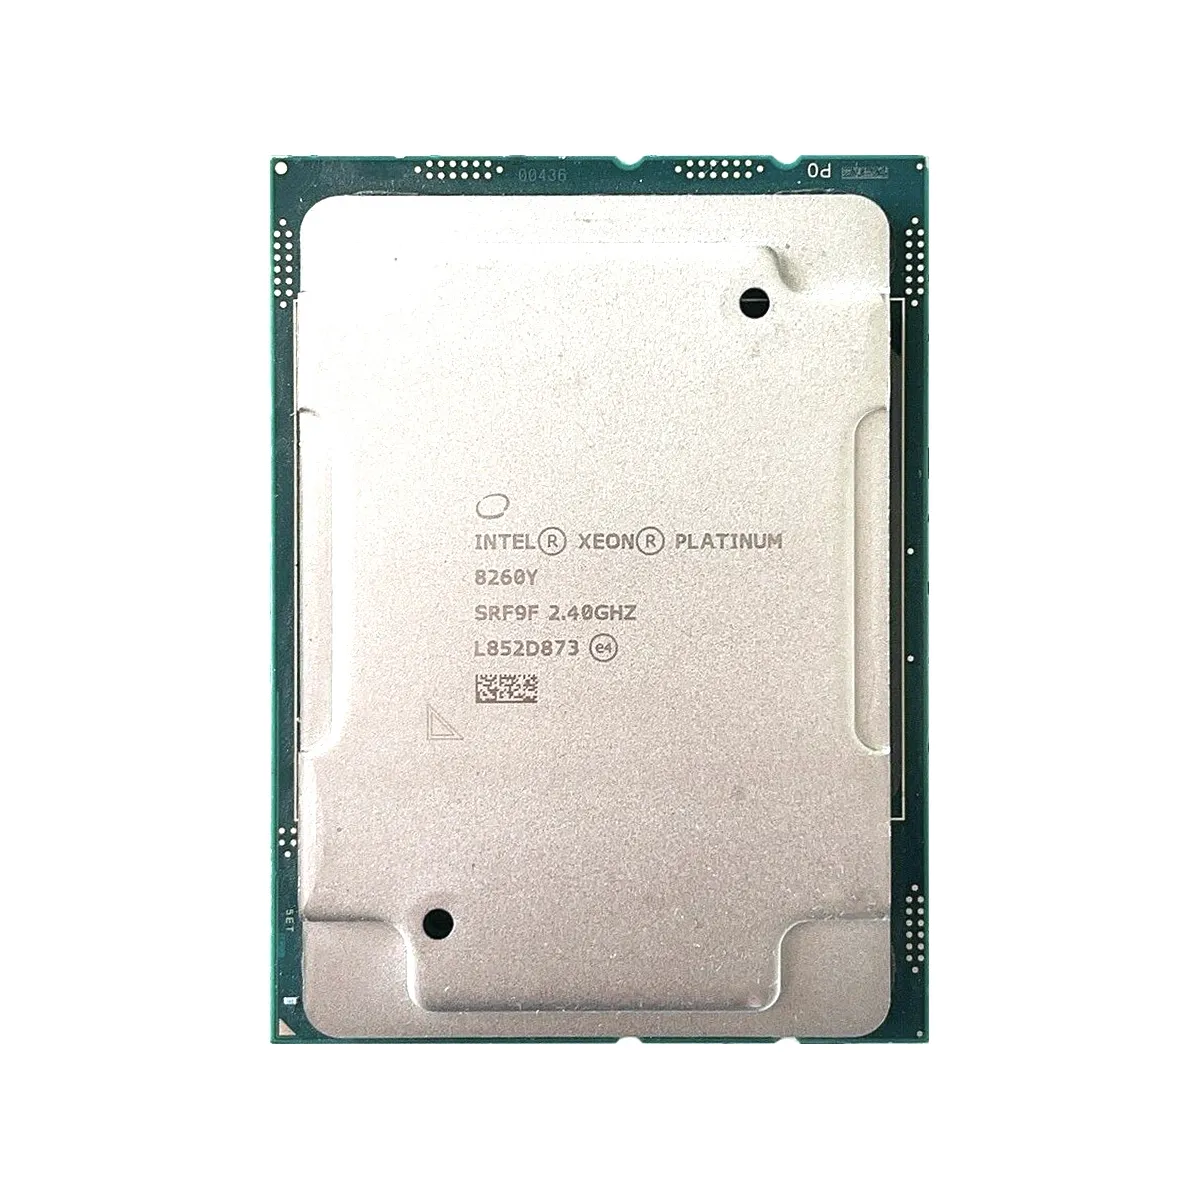 Intel Xeon Platinum 8260Y (SRF9F) 2.40GHz 24-Core LGA3647 165W 35.75MB CPU